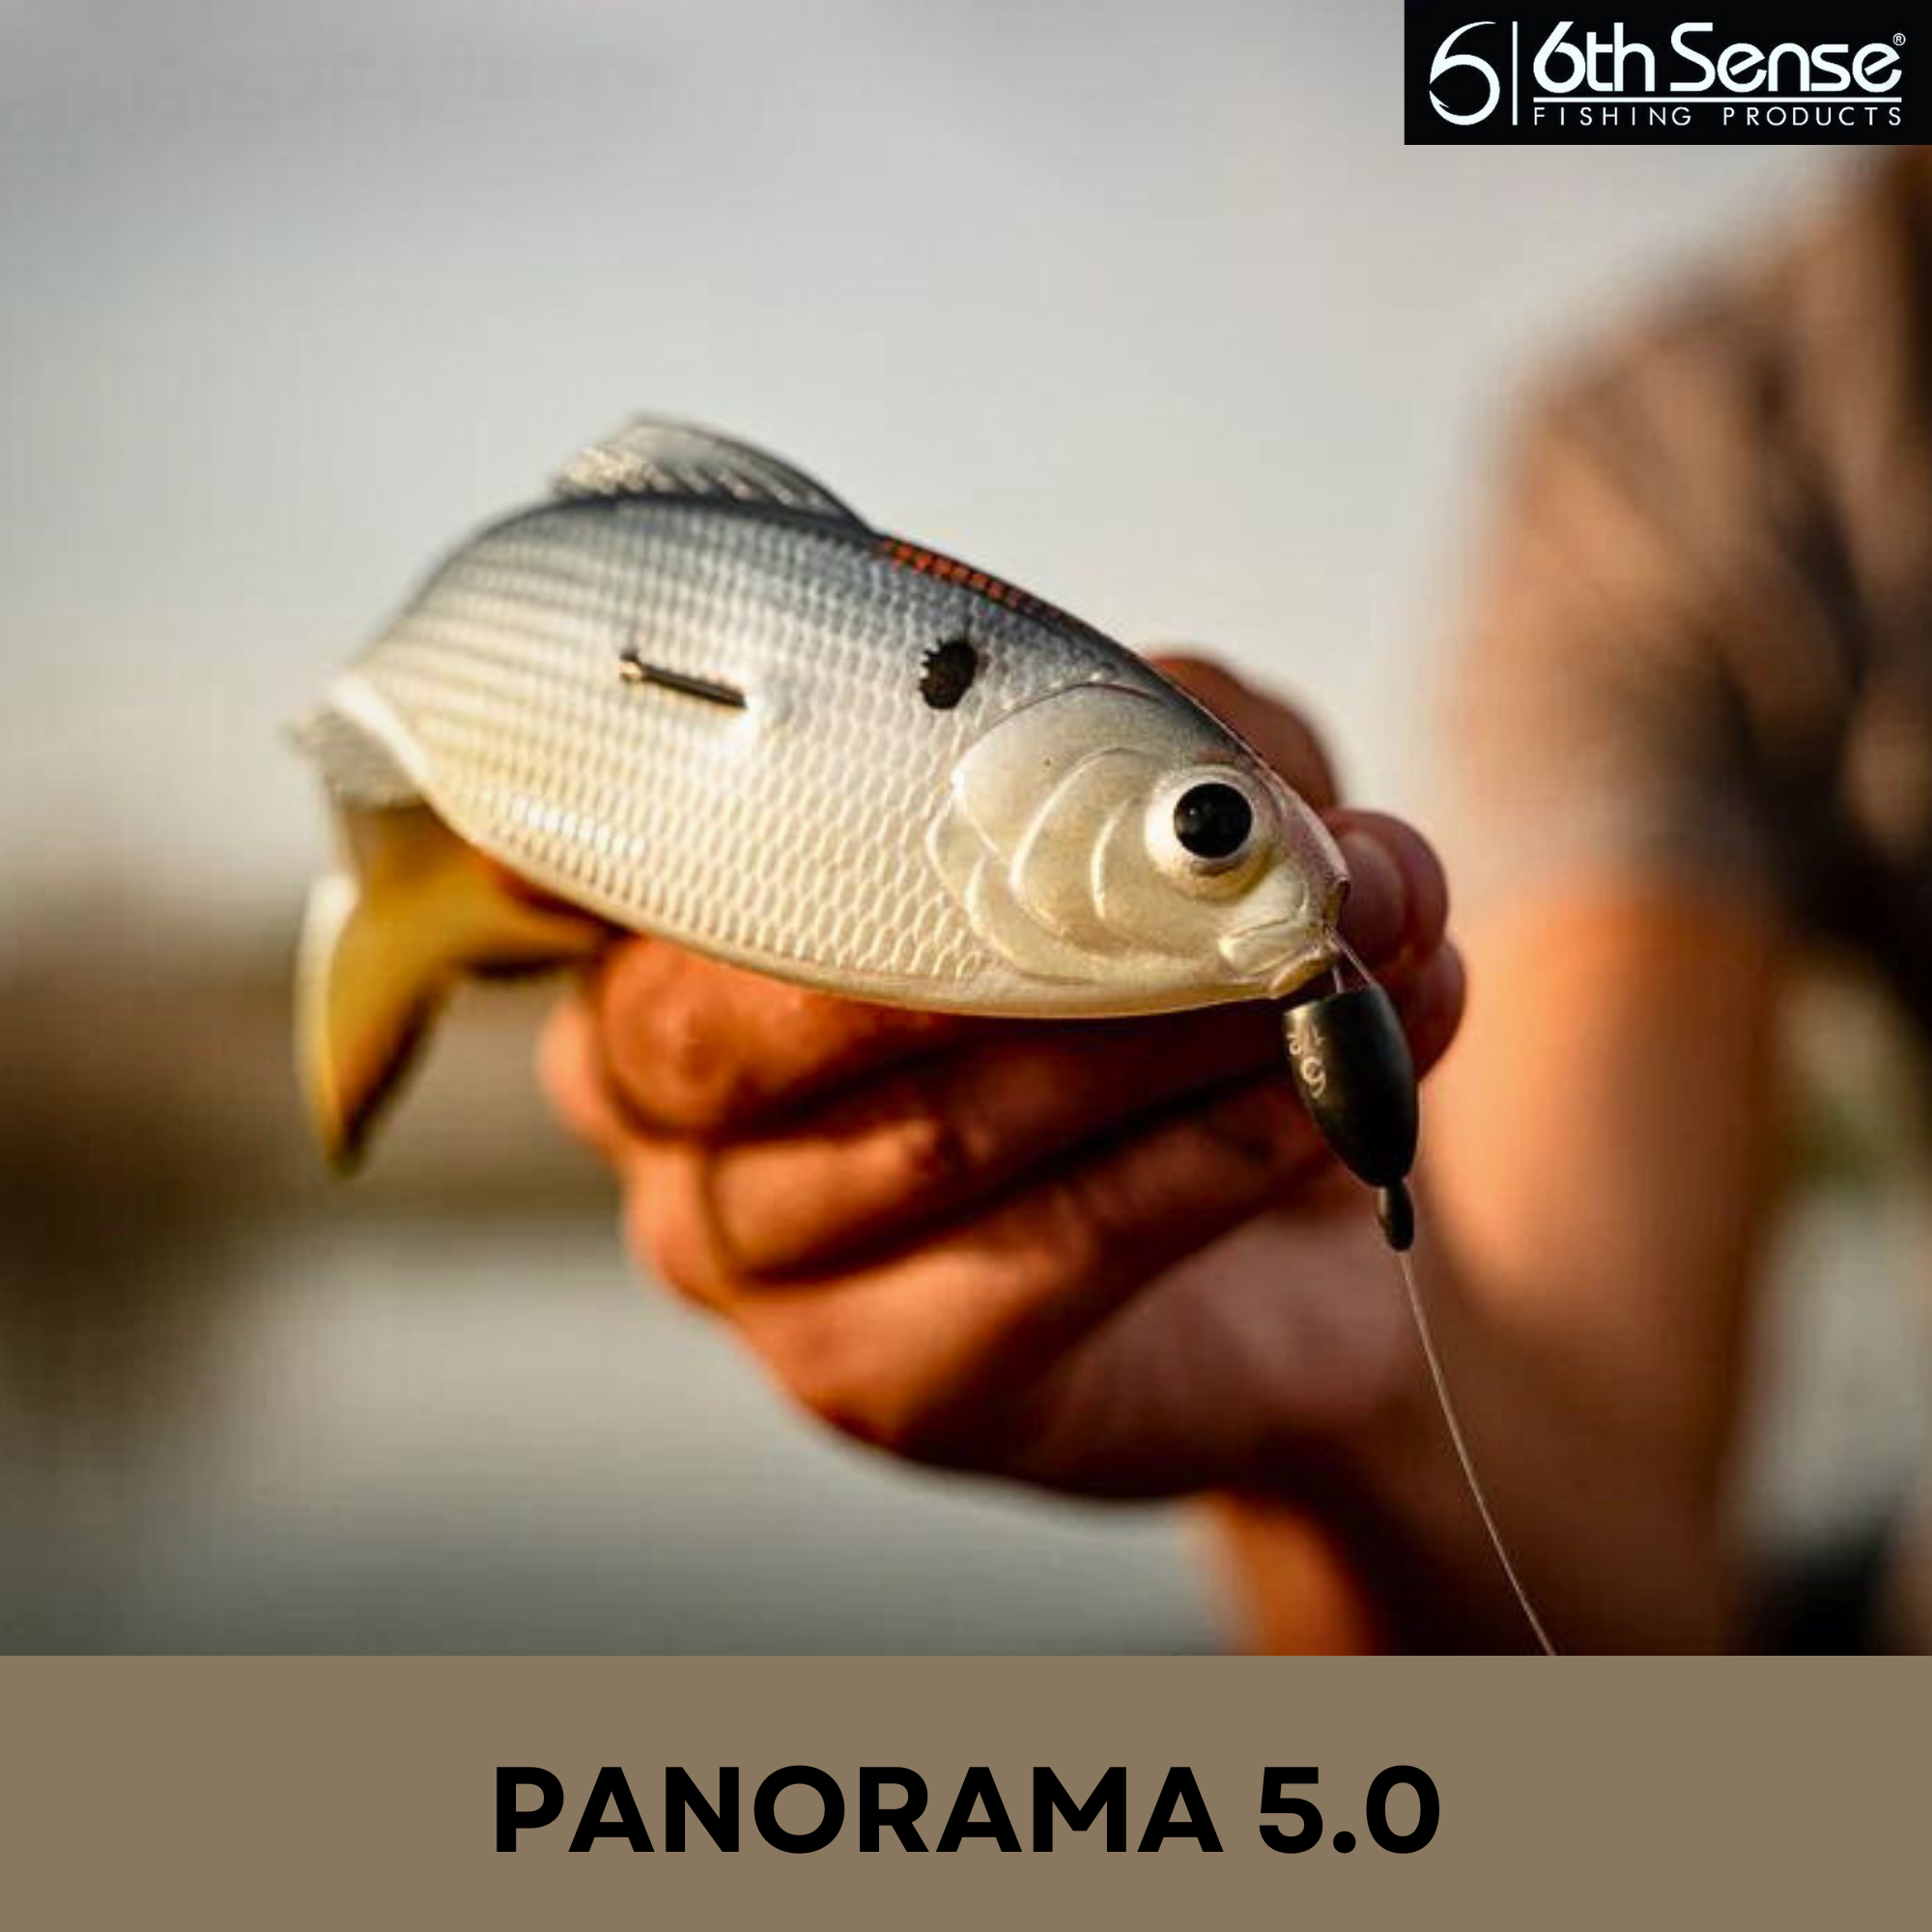 Panorama 5.0, Soft Plastic Lure, 6th Sense Fishing